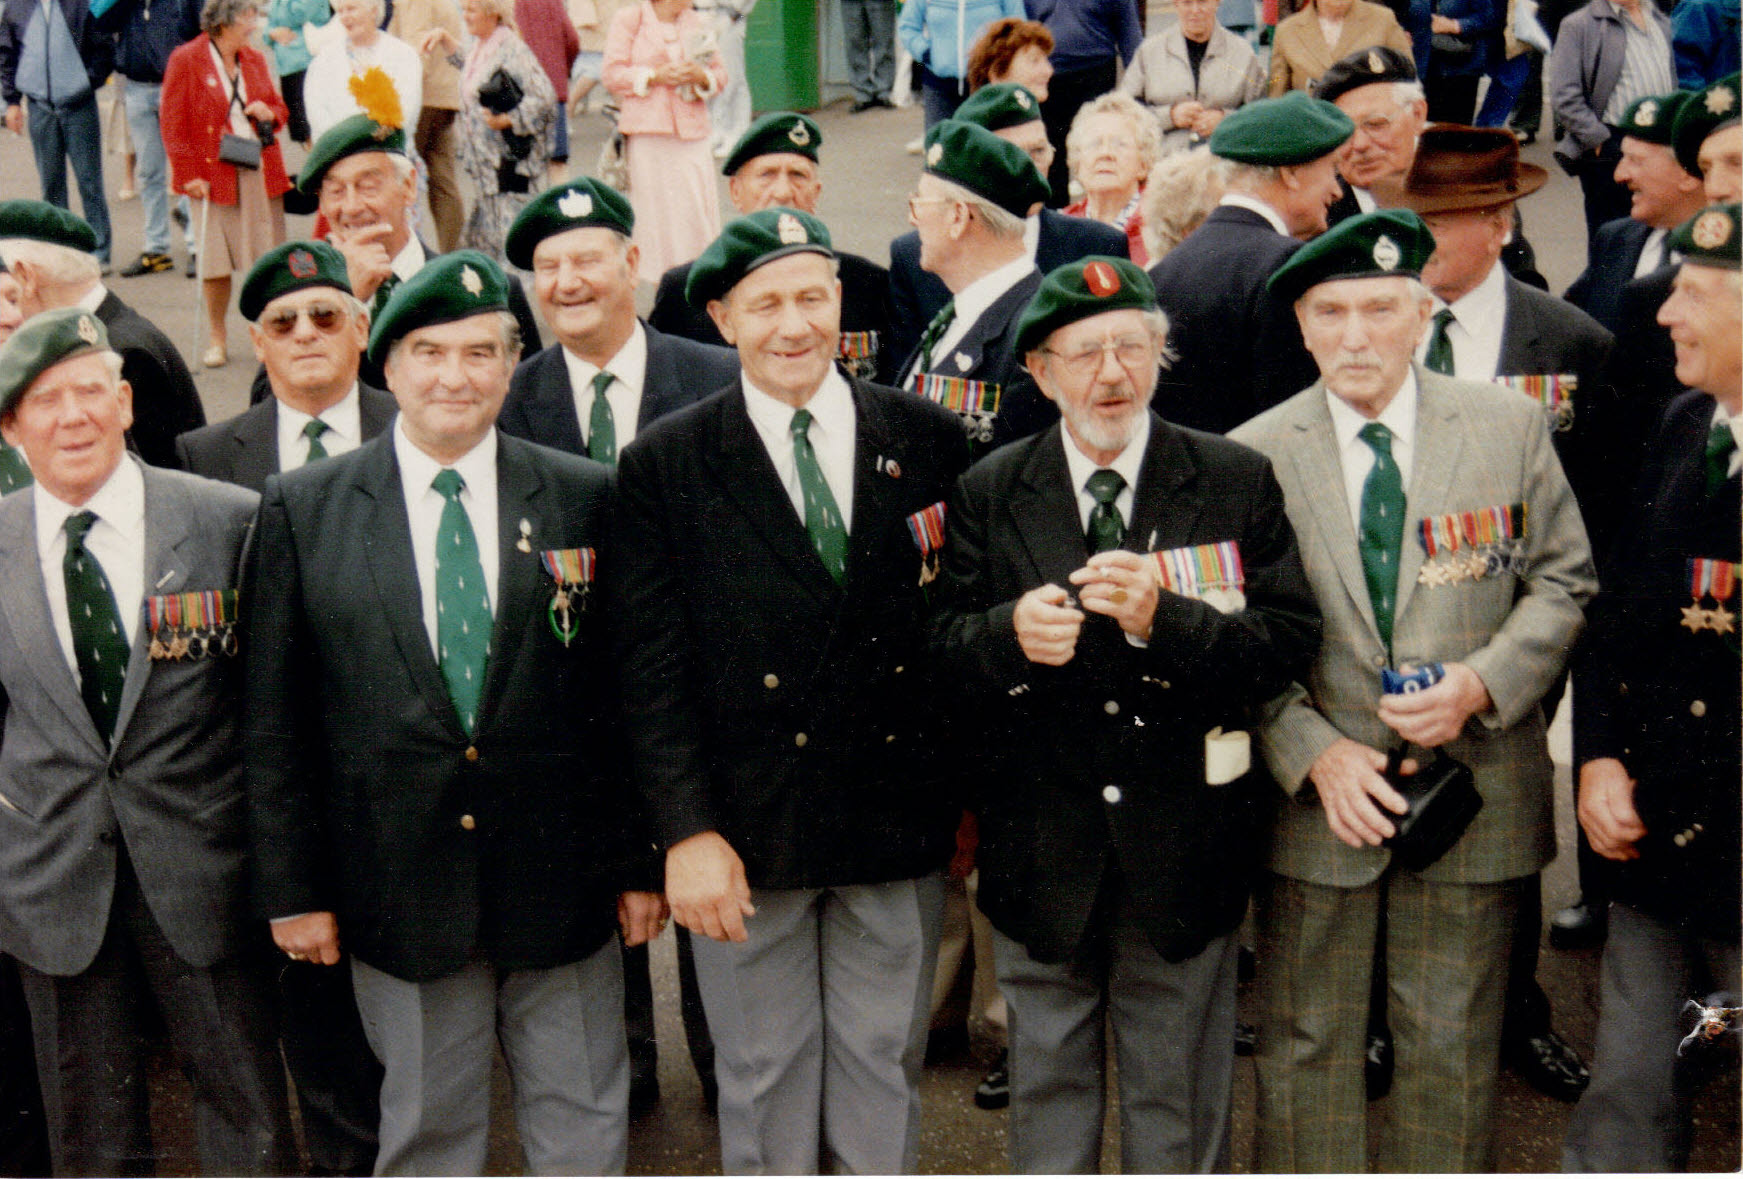 Group of Veterans several from No 5 Cdo